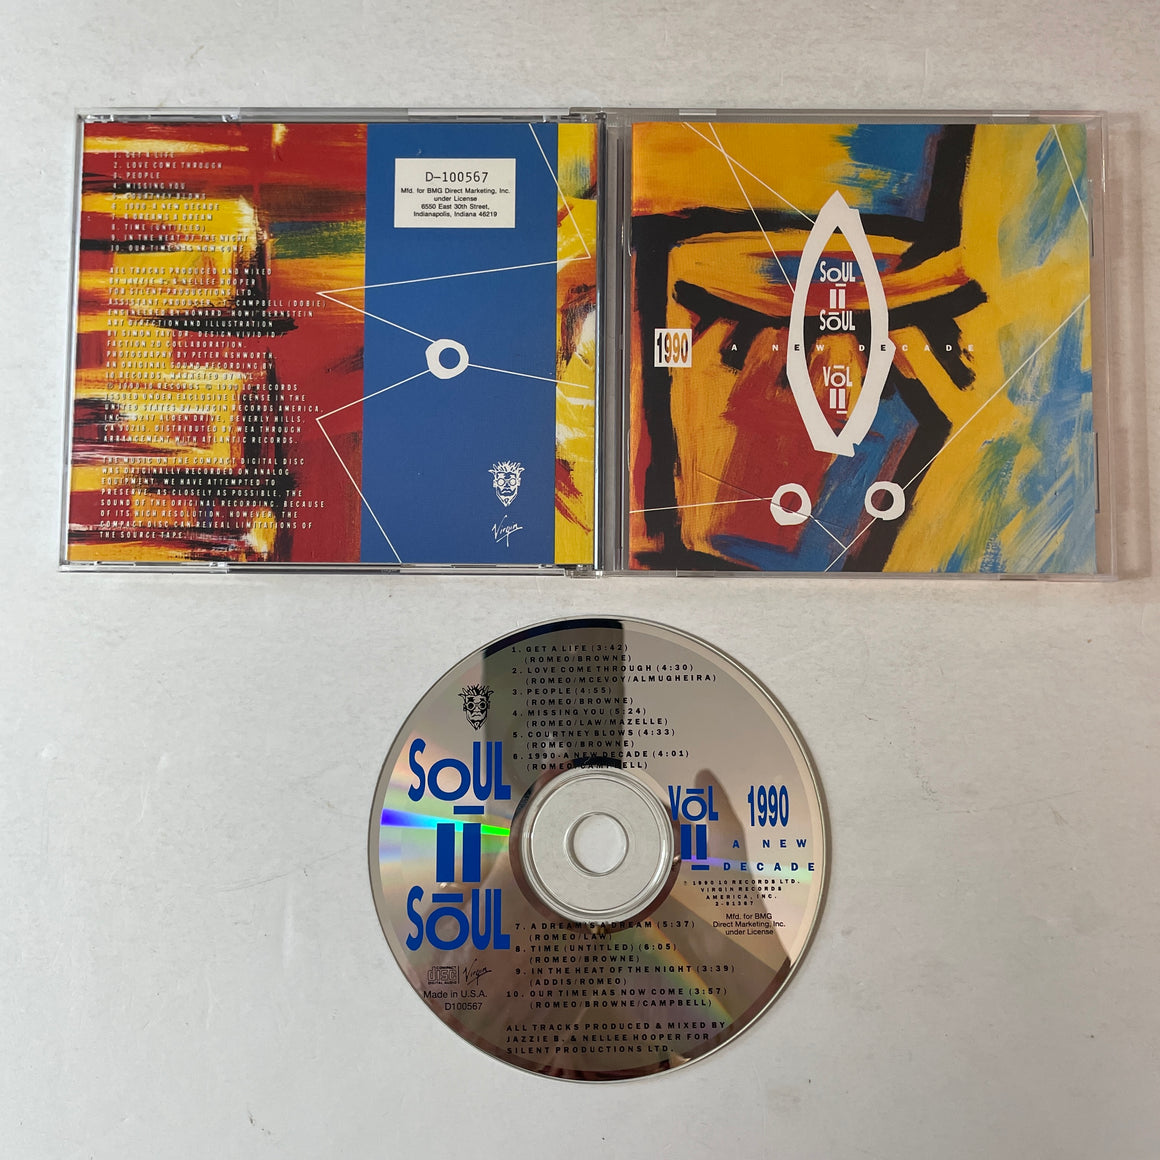 Soul II Soul Vol II - 1990 - A New Decade Used CD VG+\VG+